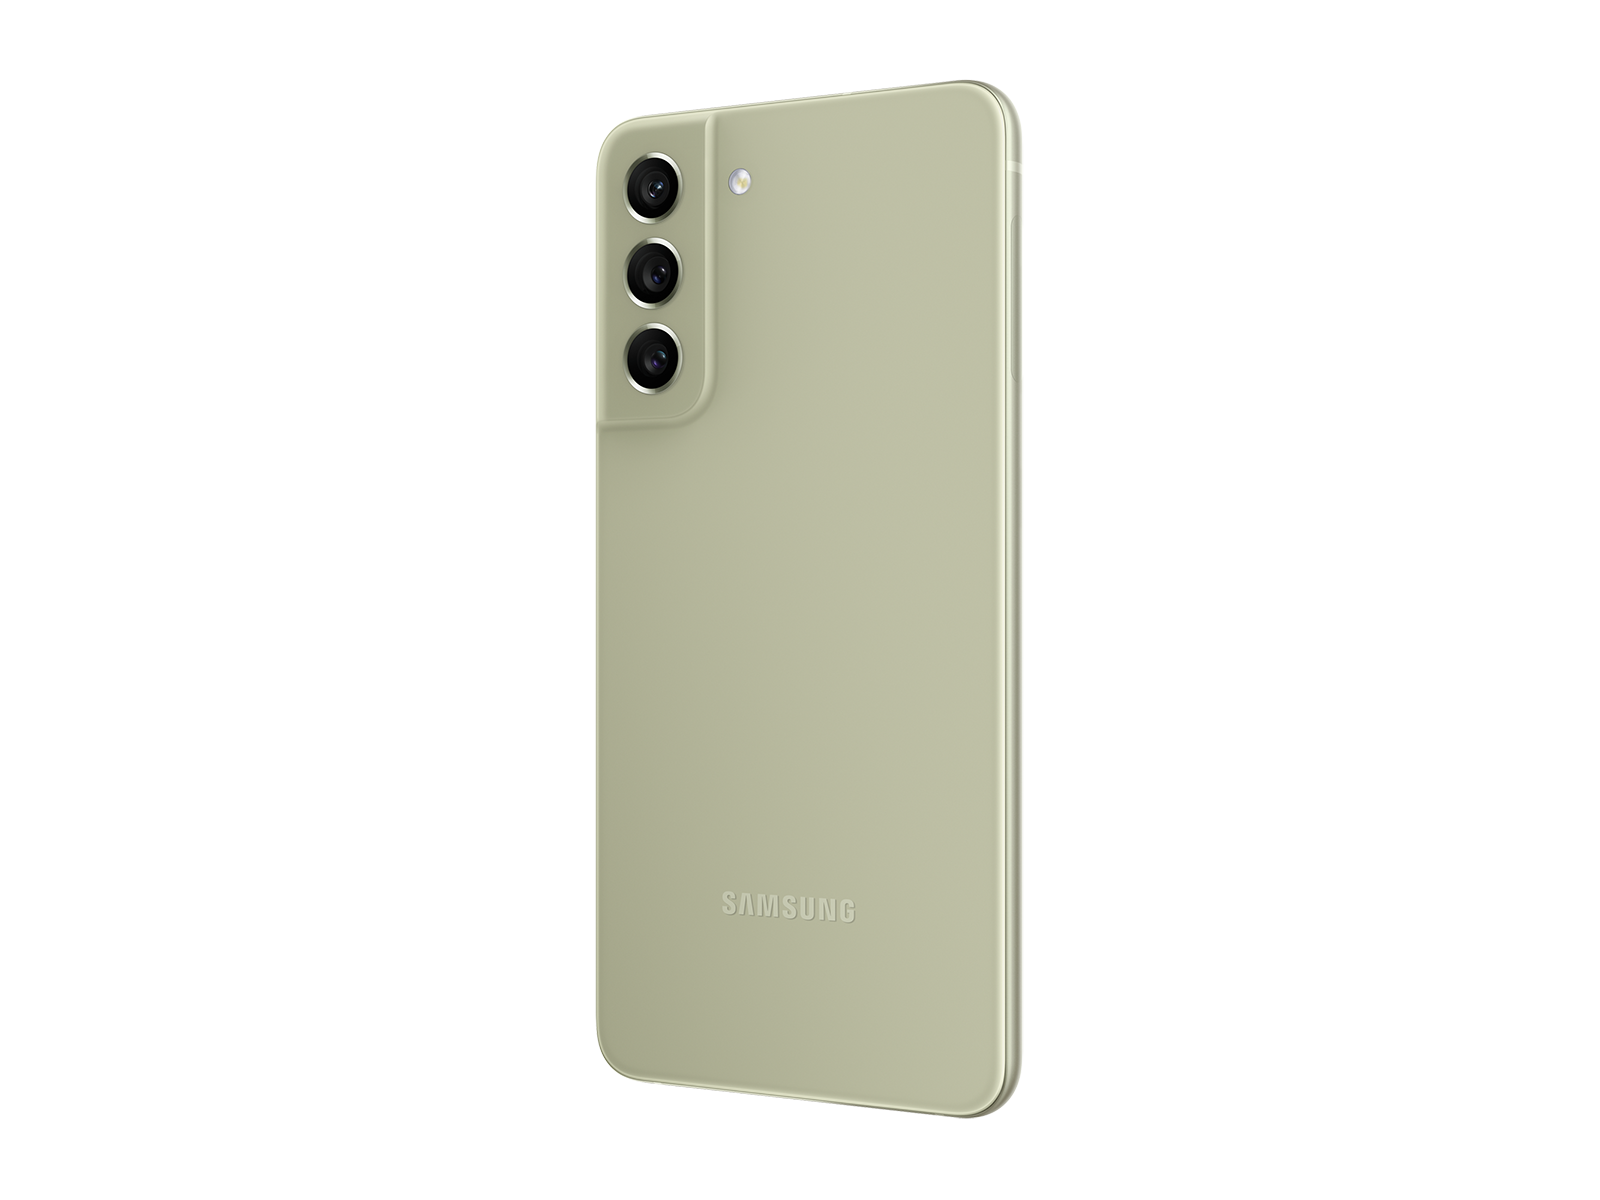 Thumbnail image of Galaxy S21 FE 5G, 128GB (Verizon)